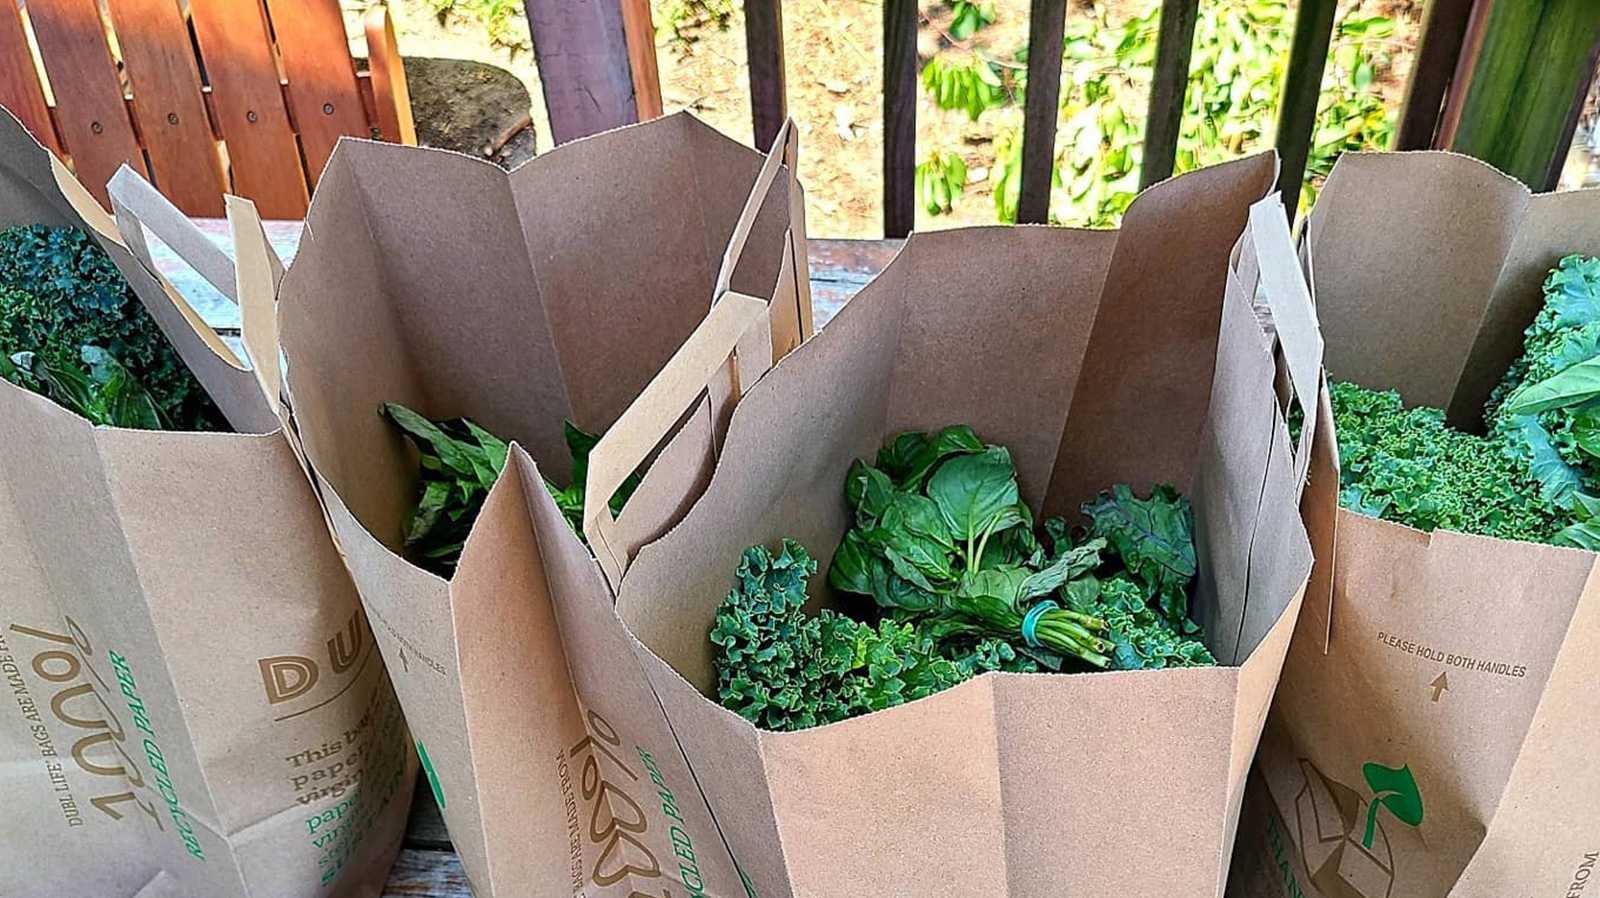 Grocery bags full of vegetables.